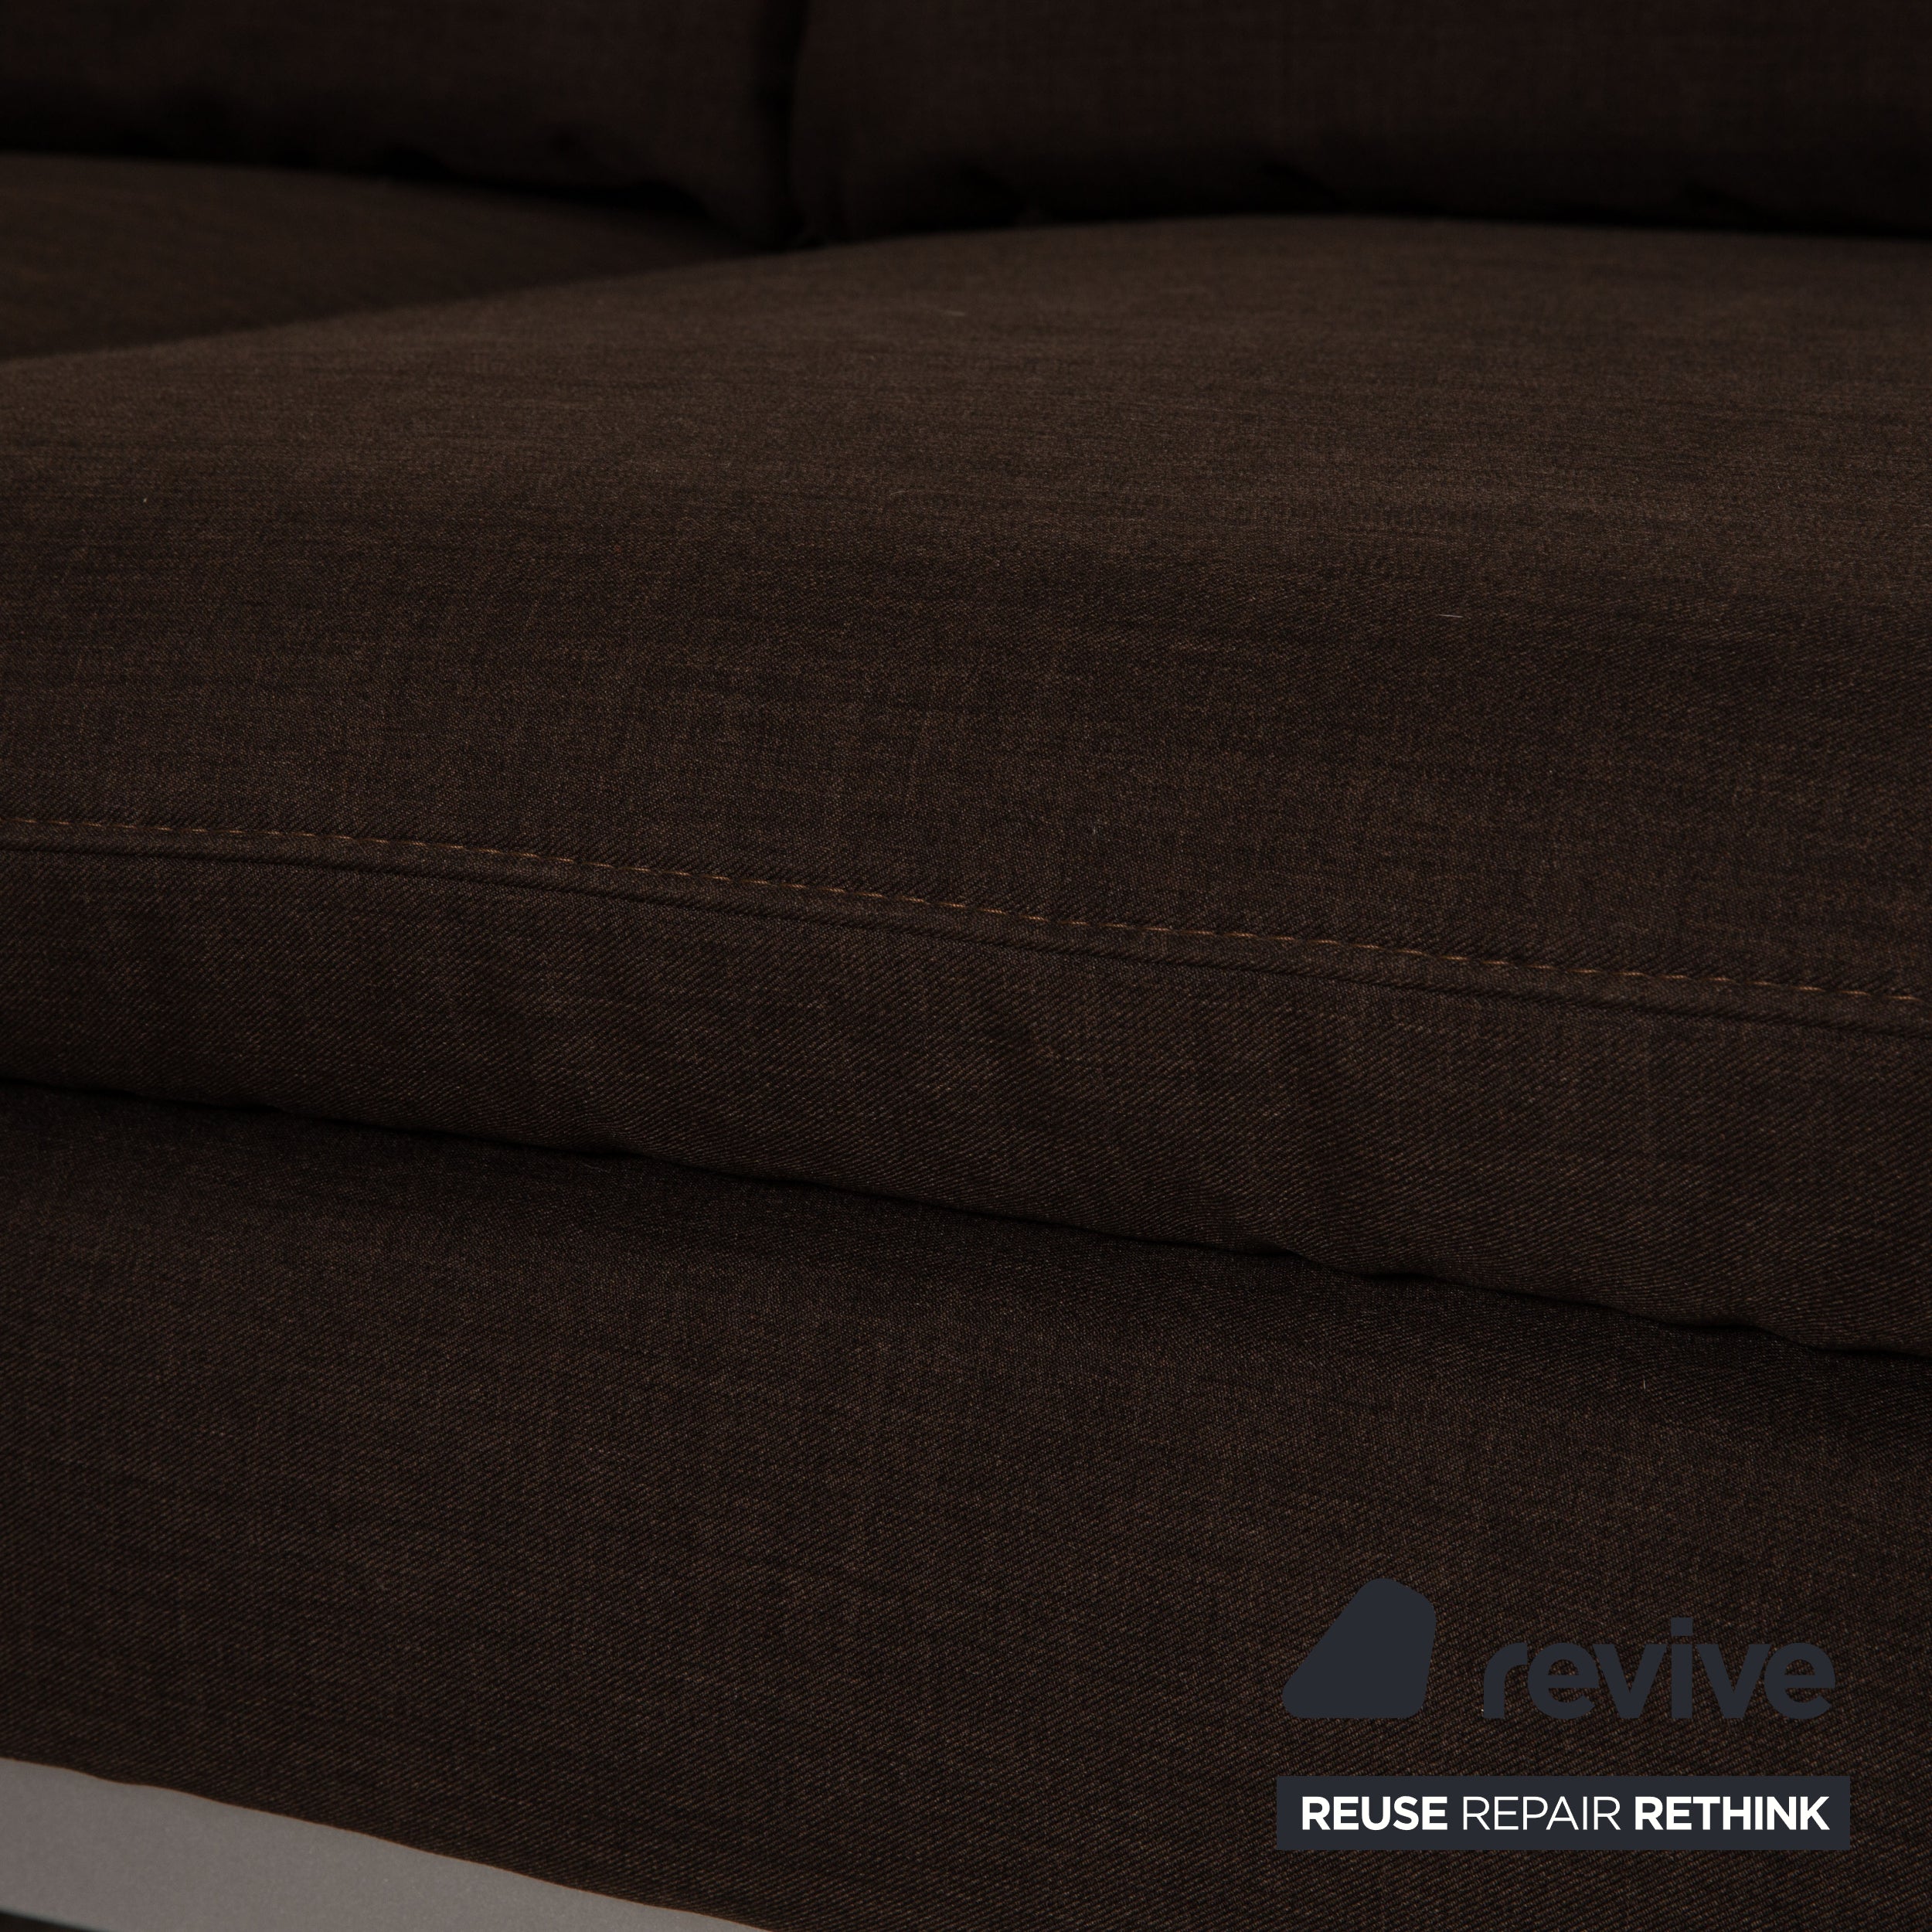 Musterring MR 675 Stoff Ecksofa Grau Sofa Couch Funktion